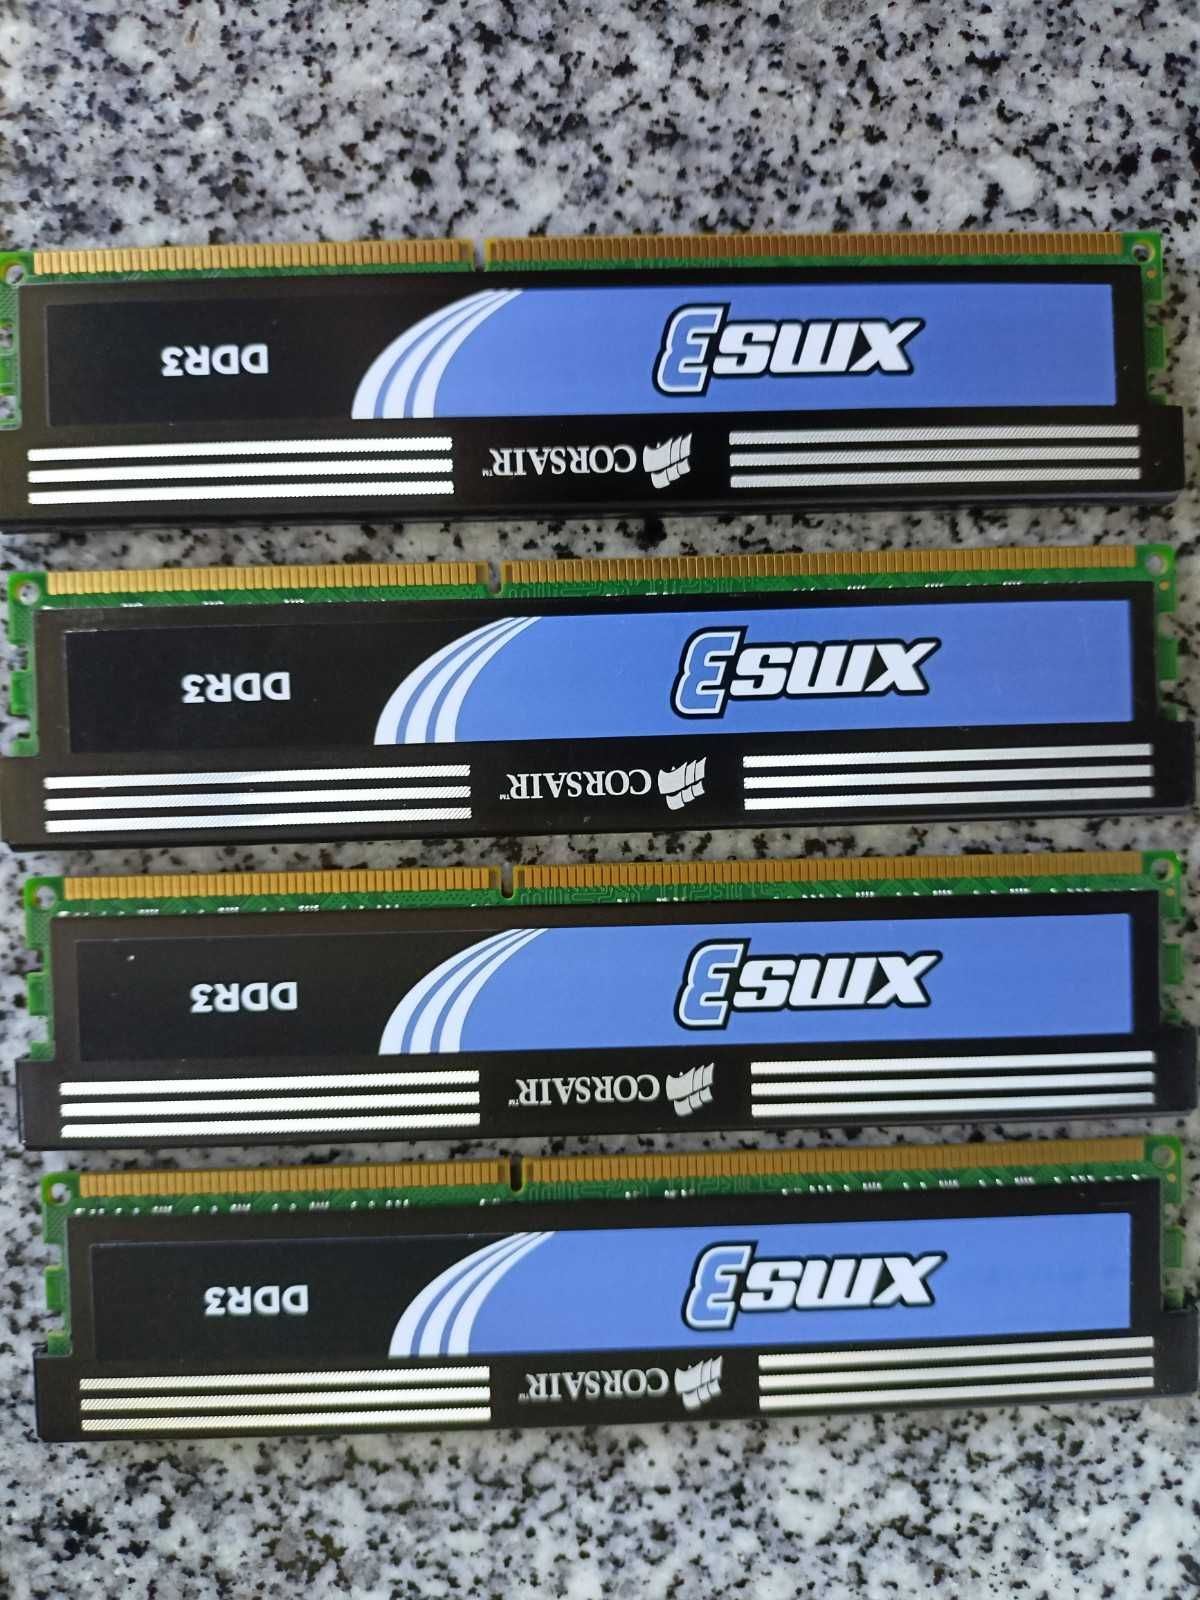 Memórias Corsair DDR3 (4x2GB)  xms3 1333MHz